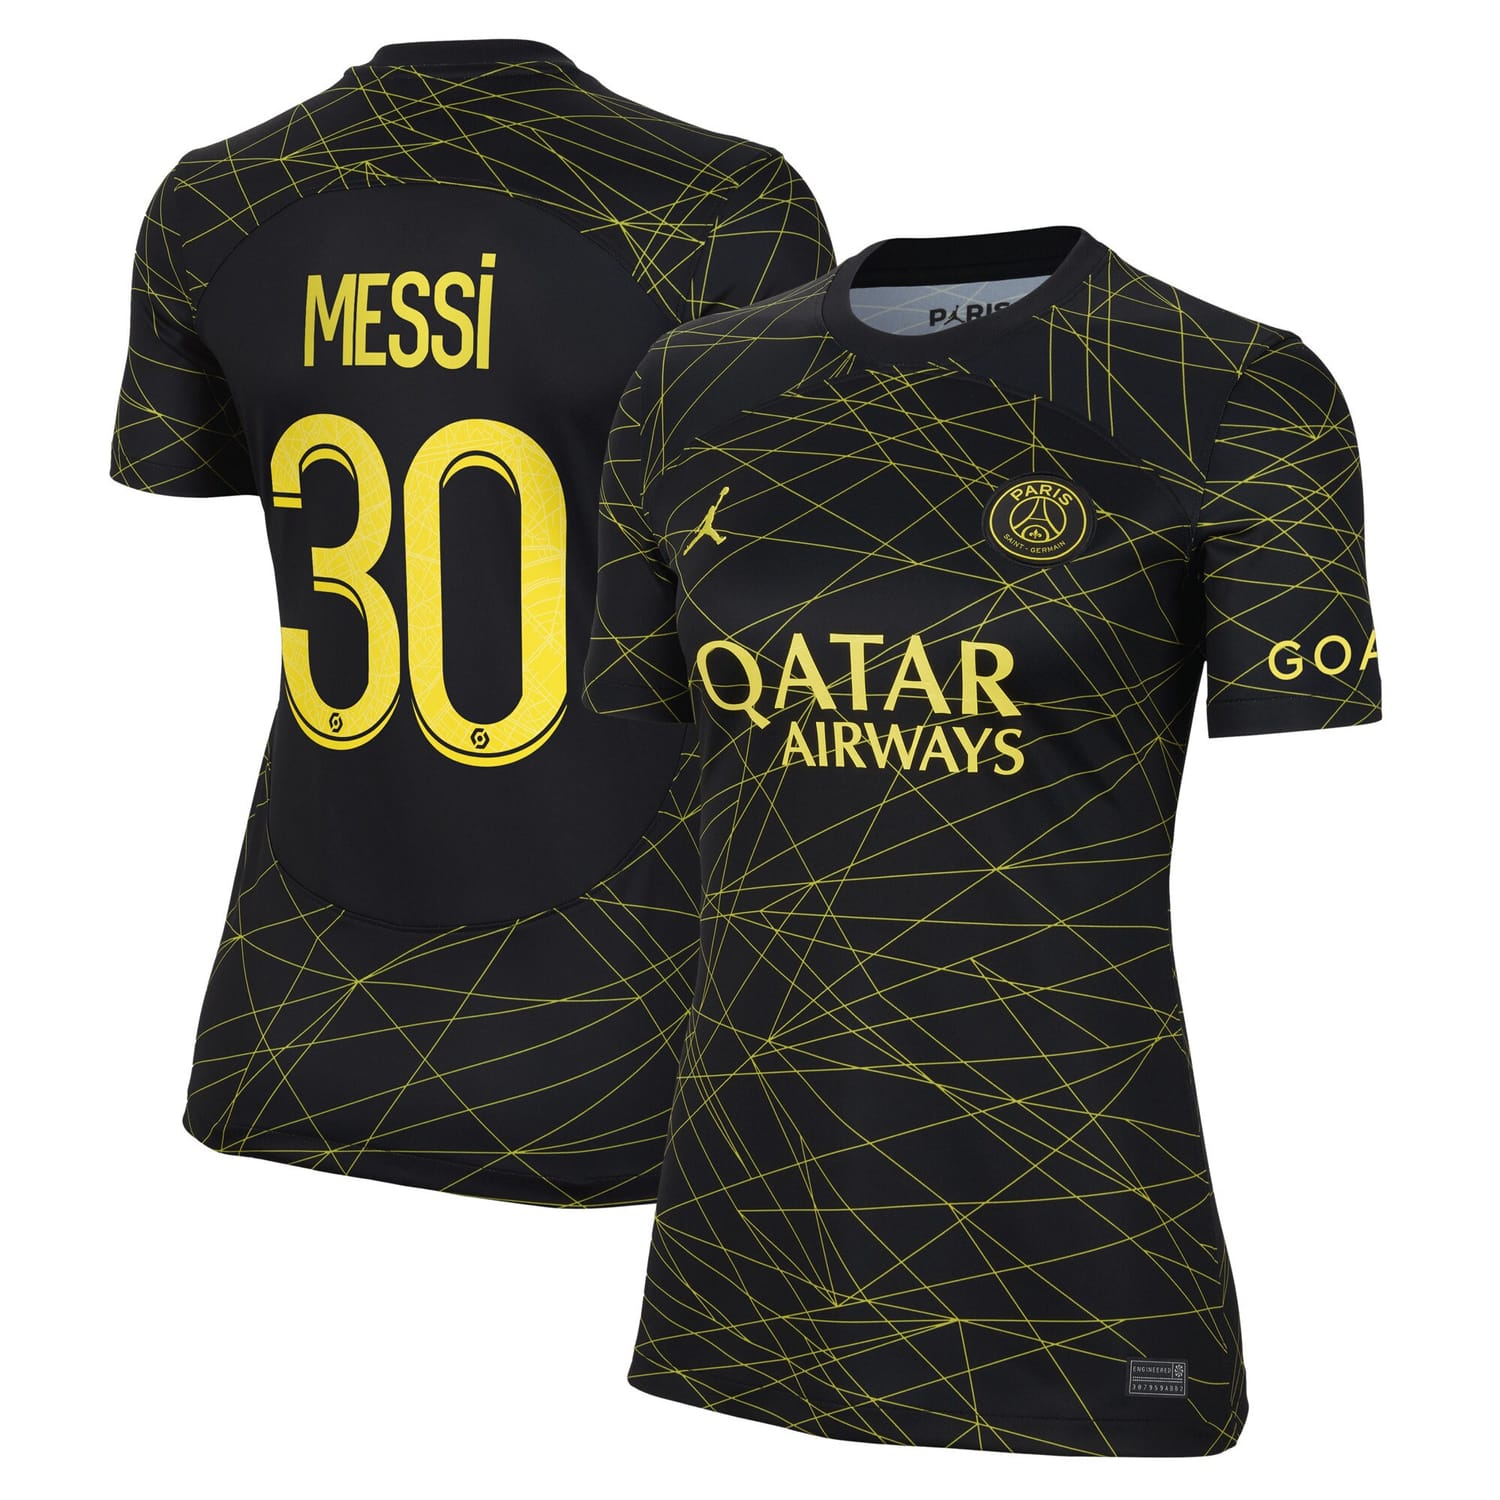 Ligue 1 Paris Saint-Germain Fourth Jersey Shirt Black 2022-23 player Lionel Messi printing for Women